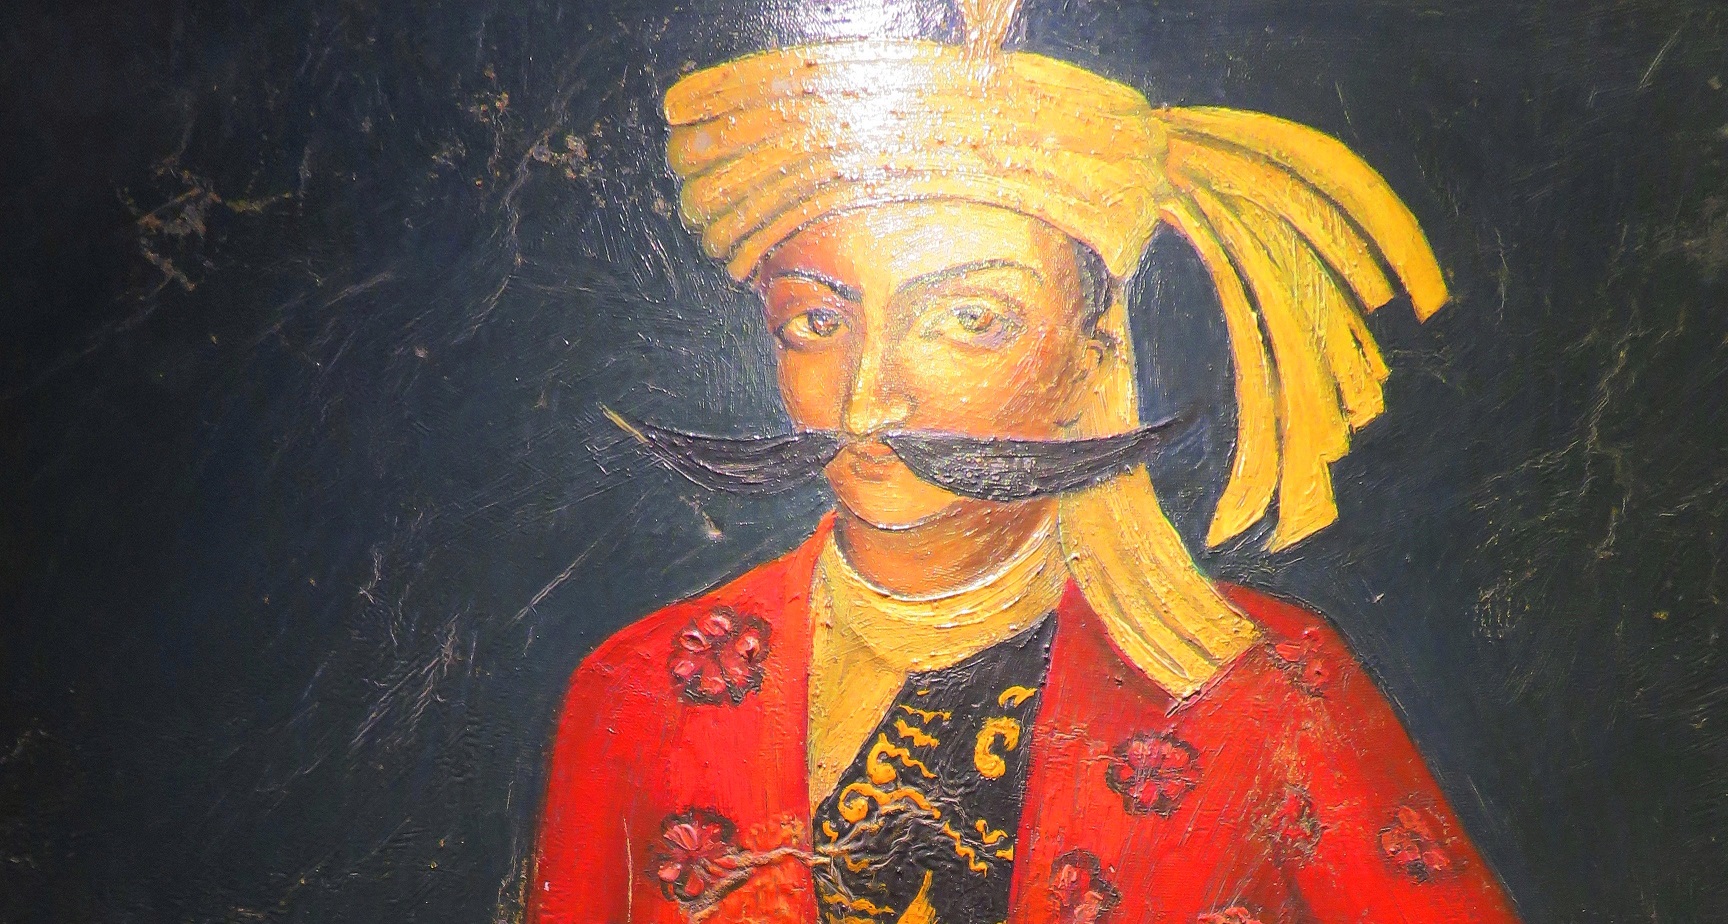 Ganj Ali Khan | One of the famous rulers in Safavid era